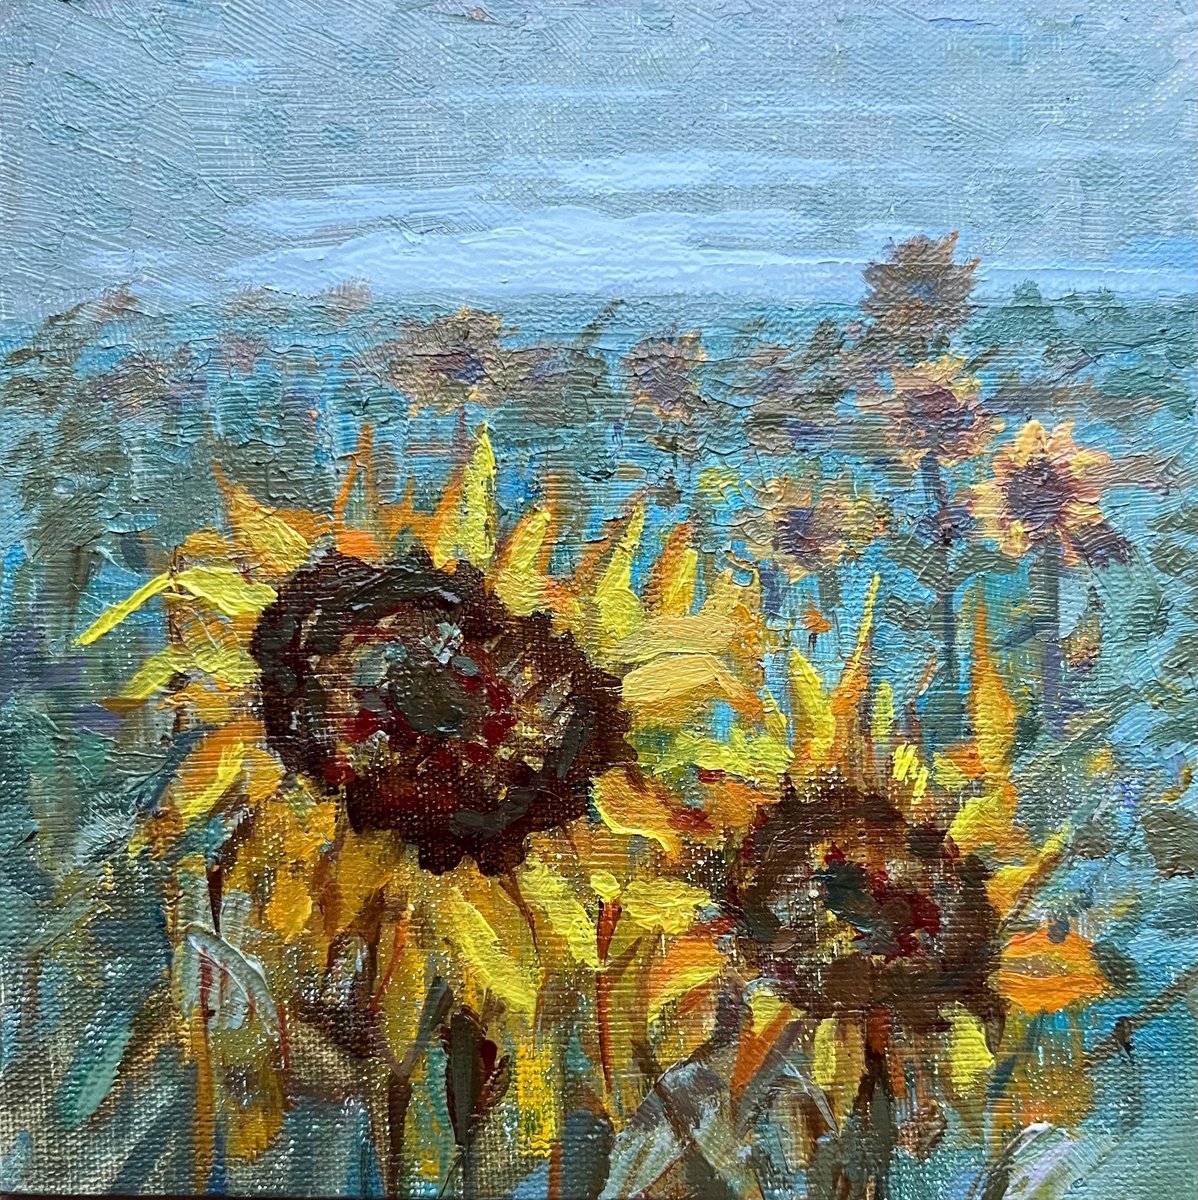 Ukrainian artwork Sunflower on the field by Roman Sergienko